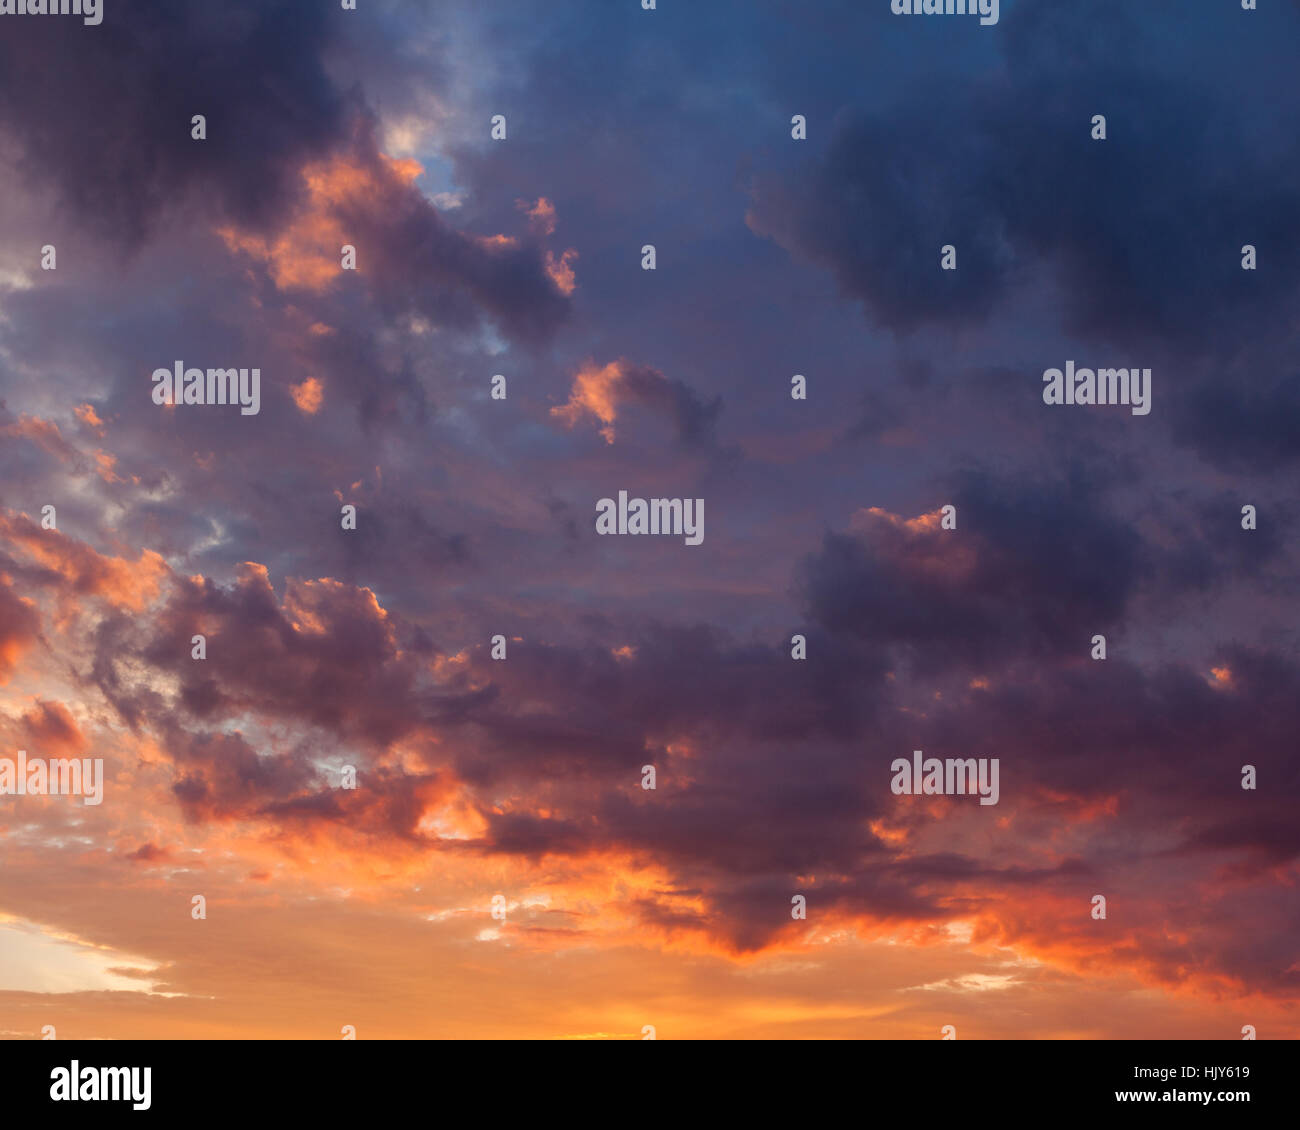 Fiery vivid sunset sky clouds Stock Photo